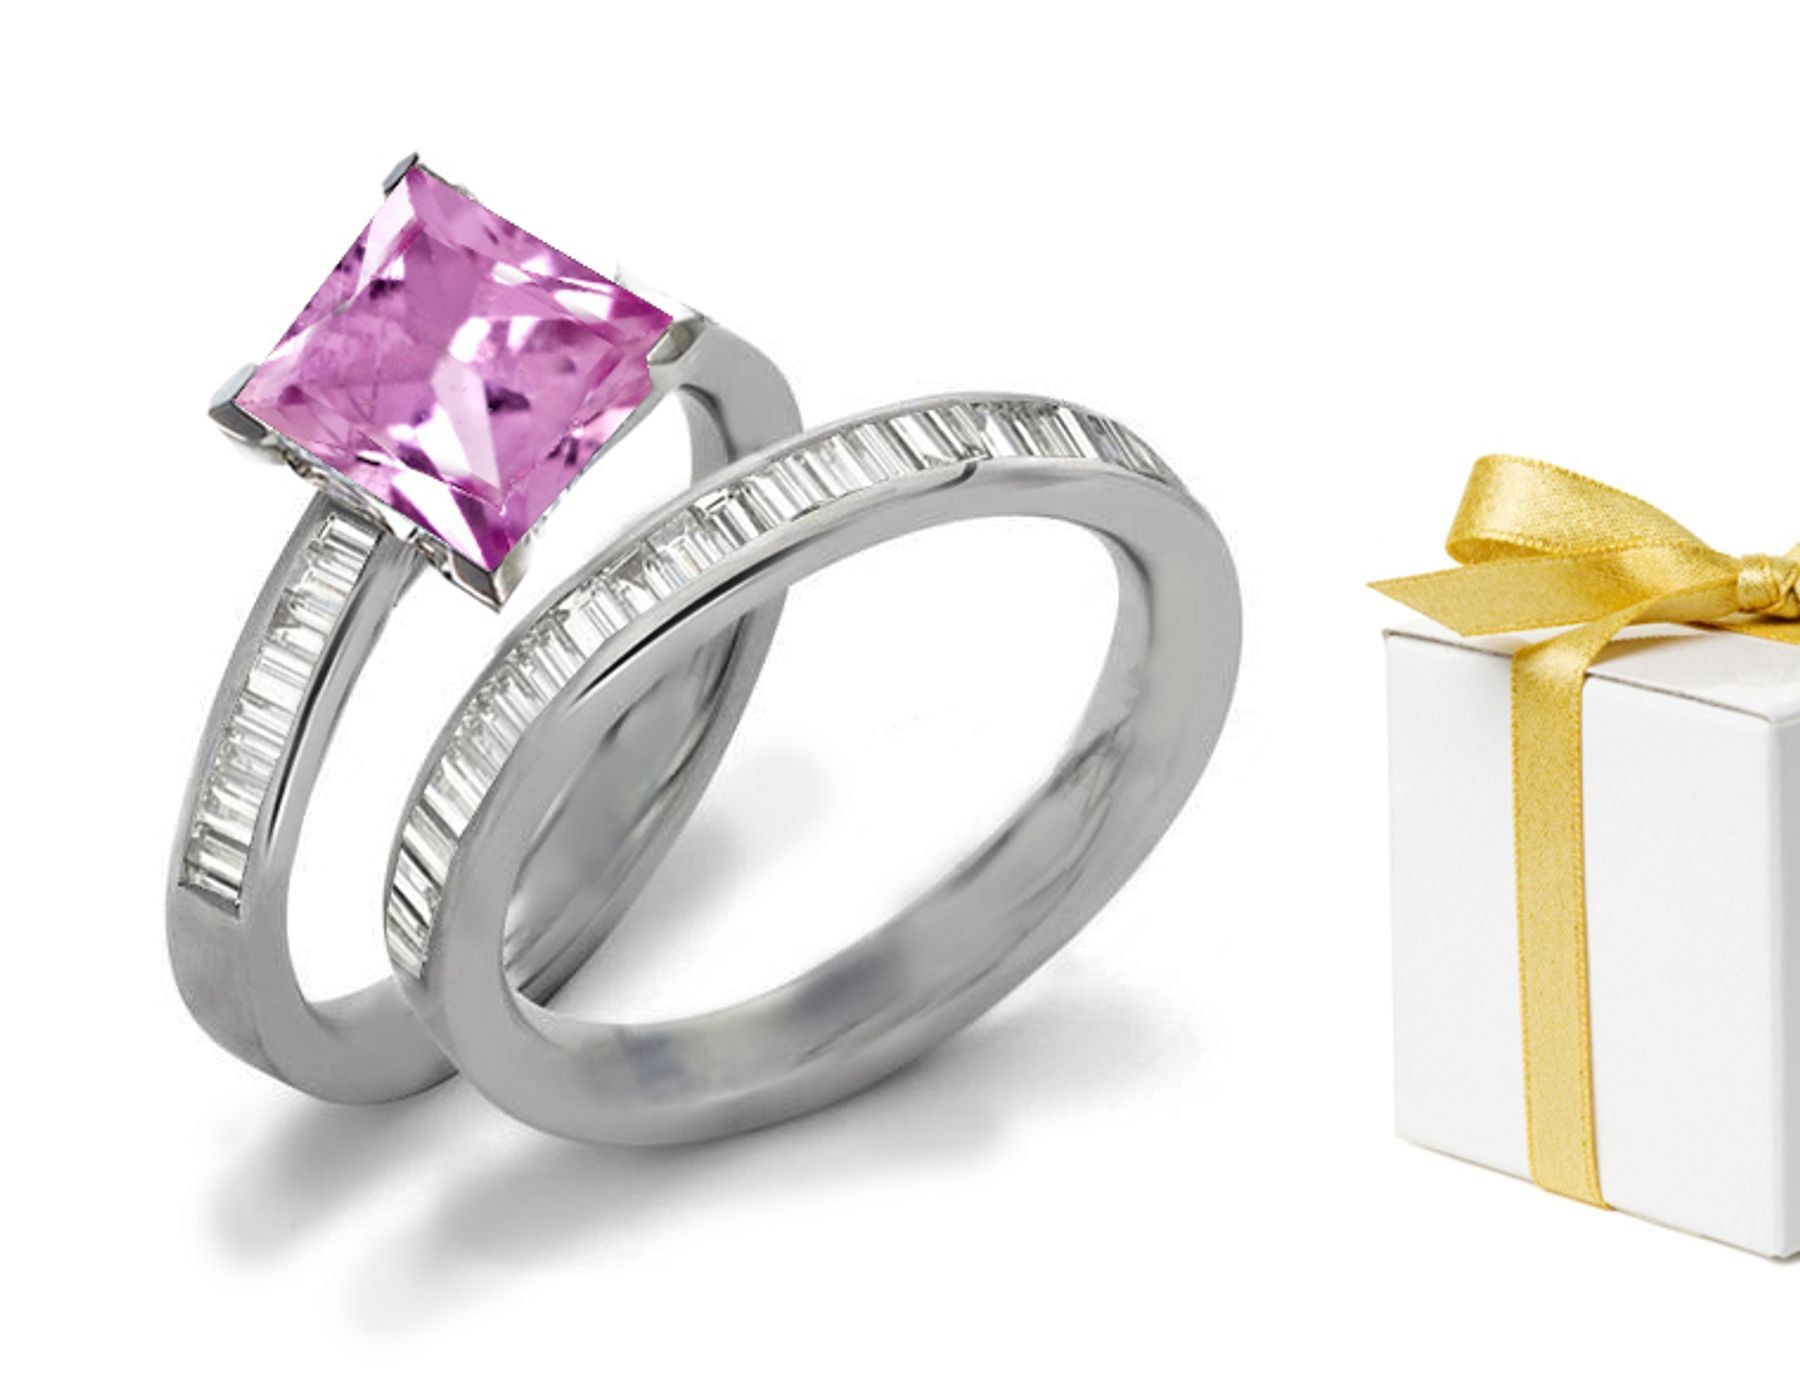 Pink Sapphire & Diamond Engagement & Wedding Ring